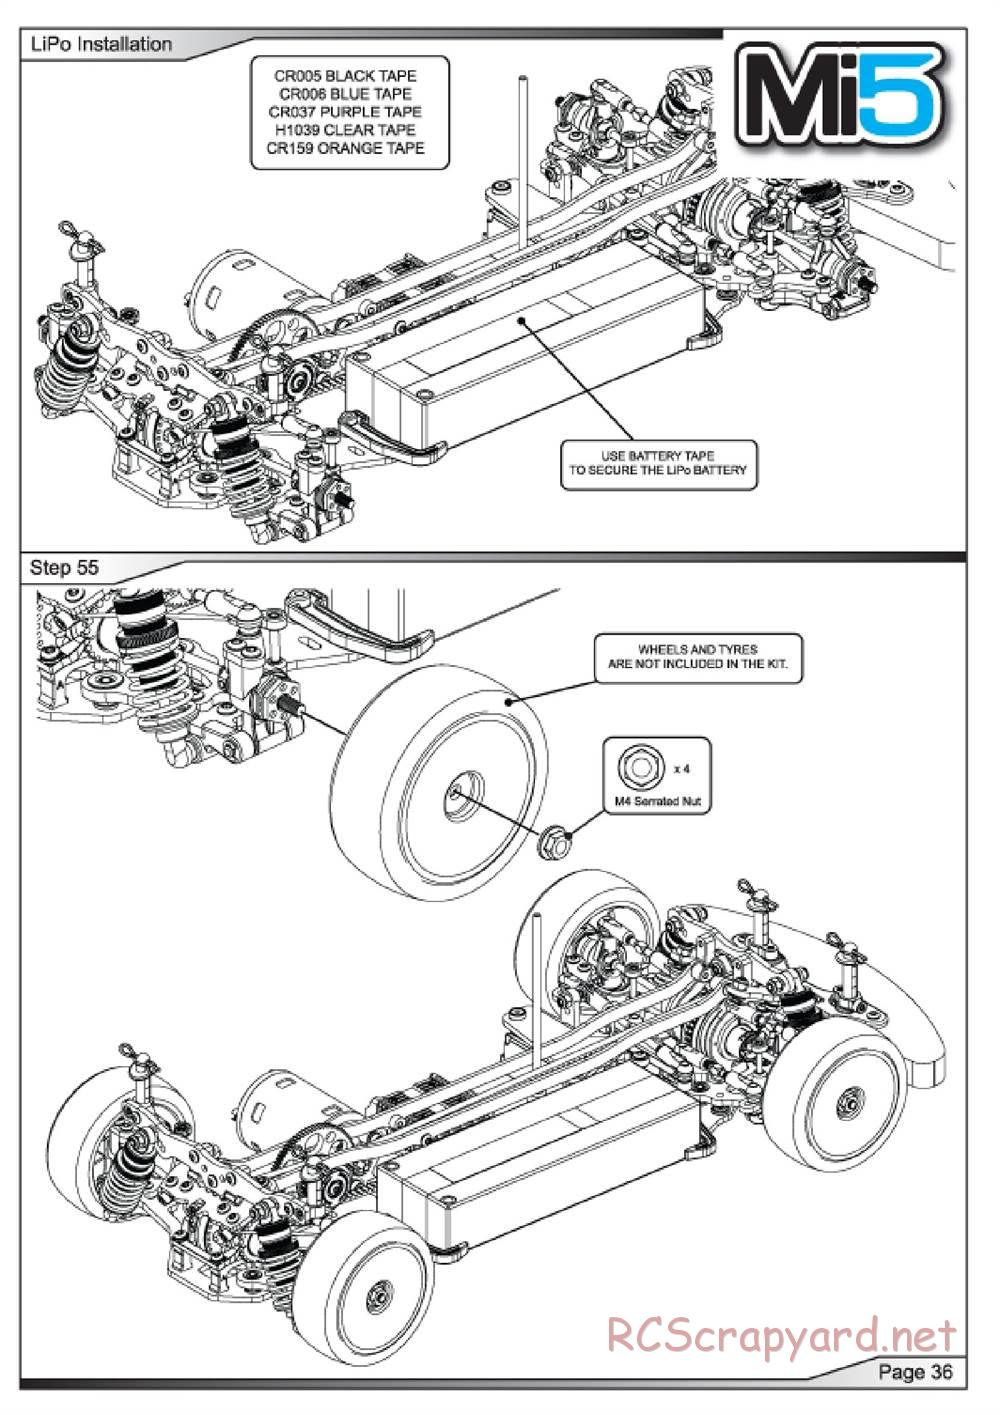 Schumacher - Mi5 - Manual - Page 45